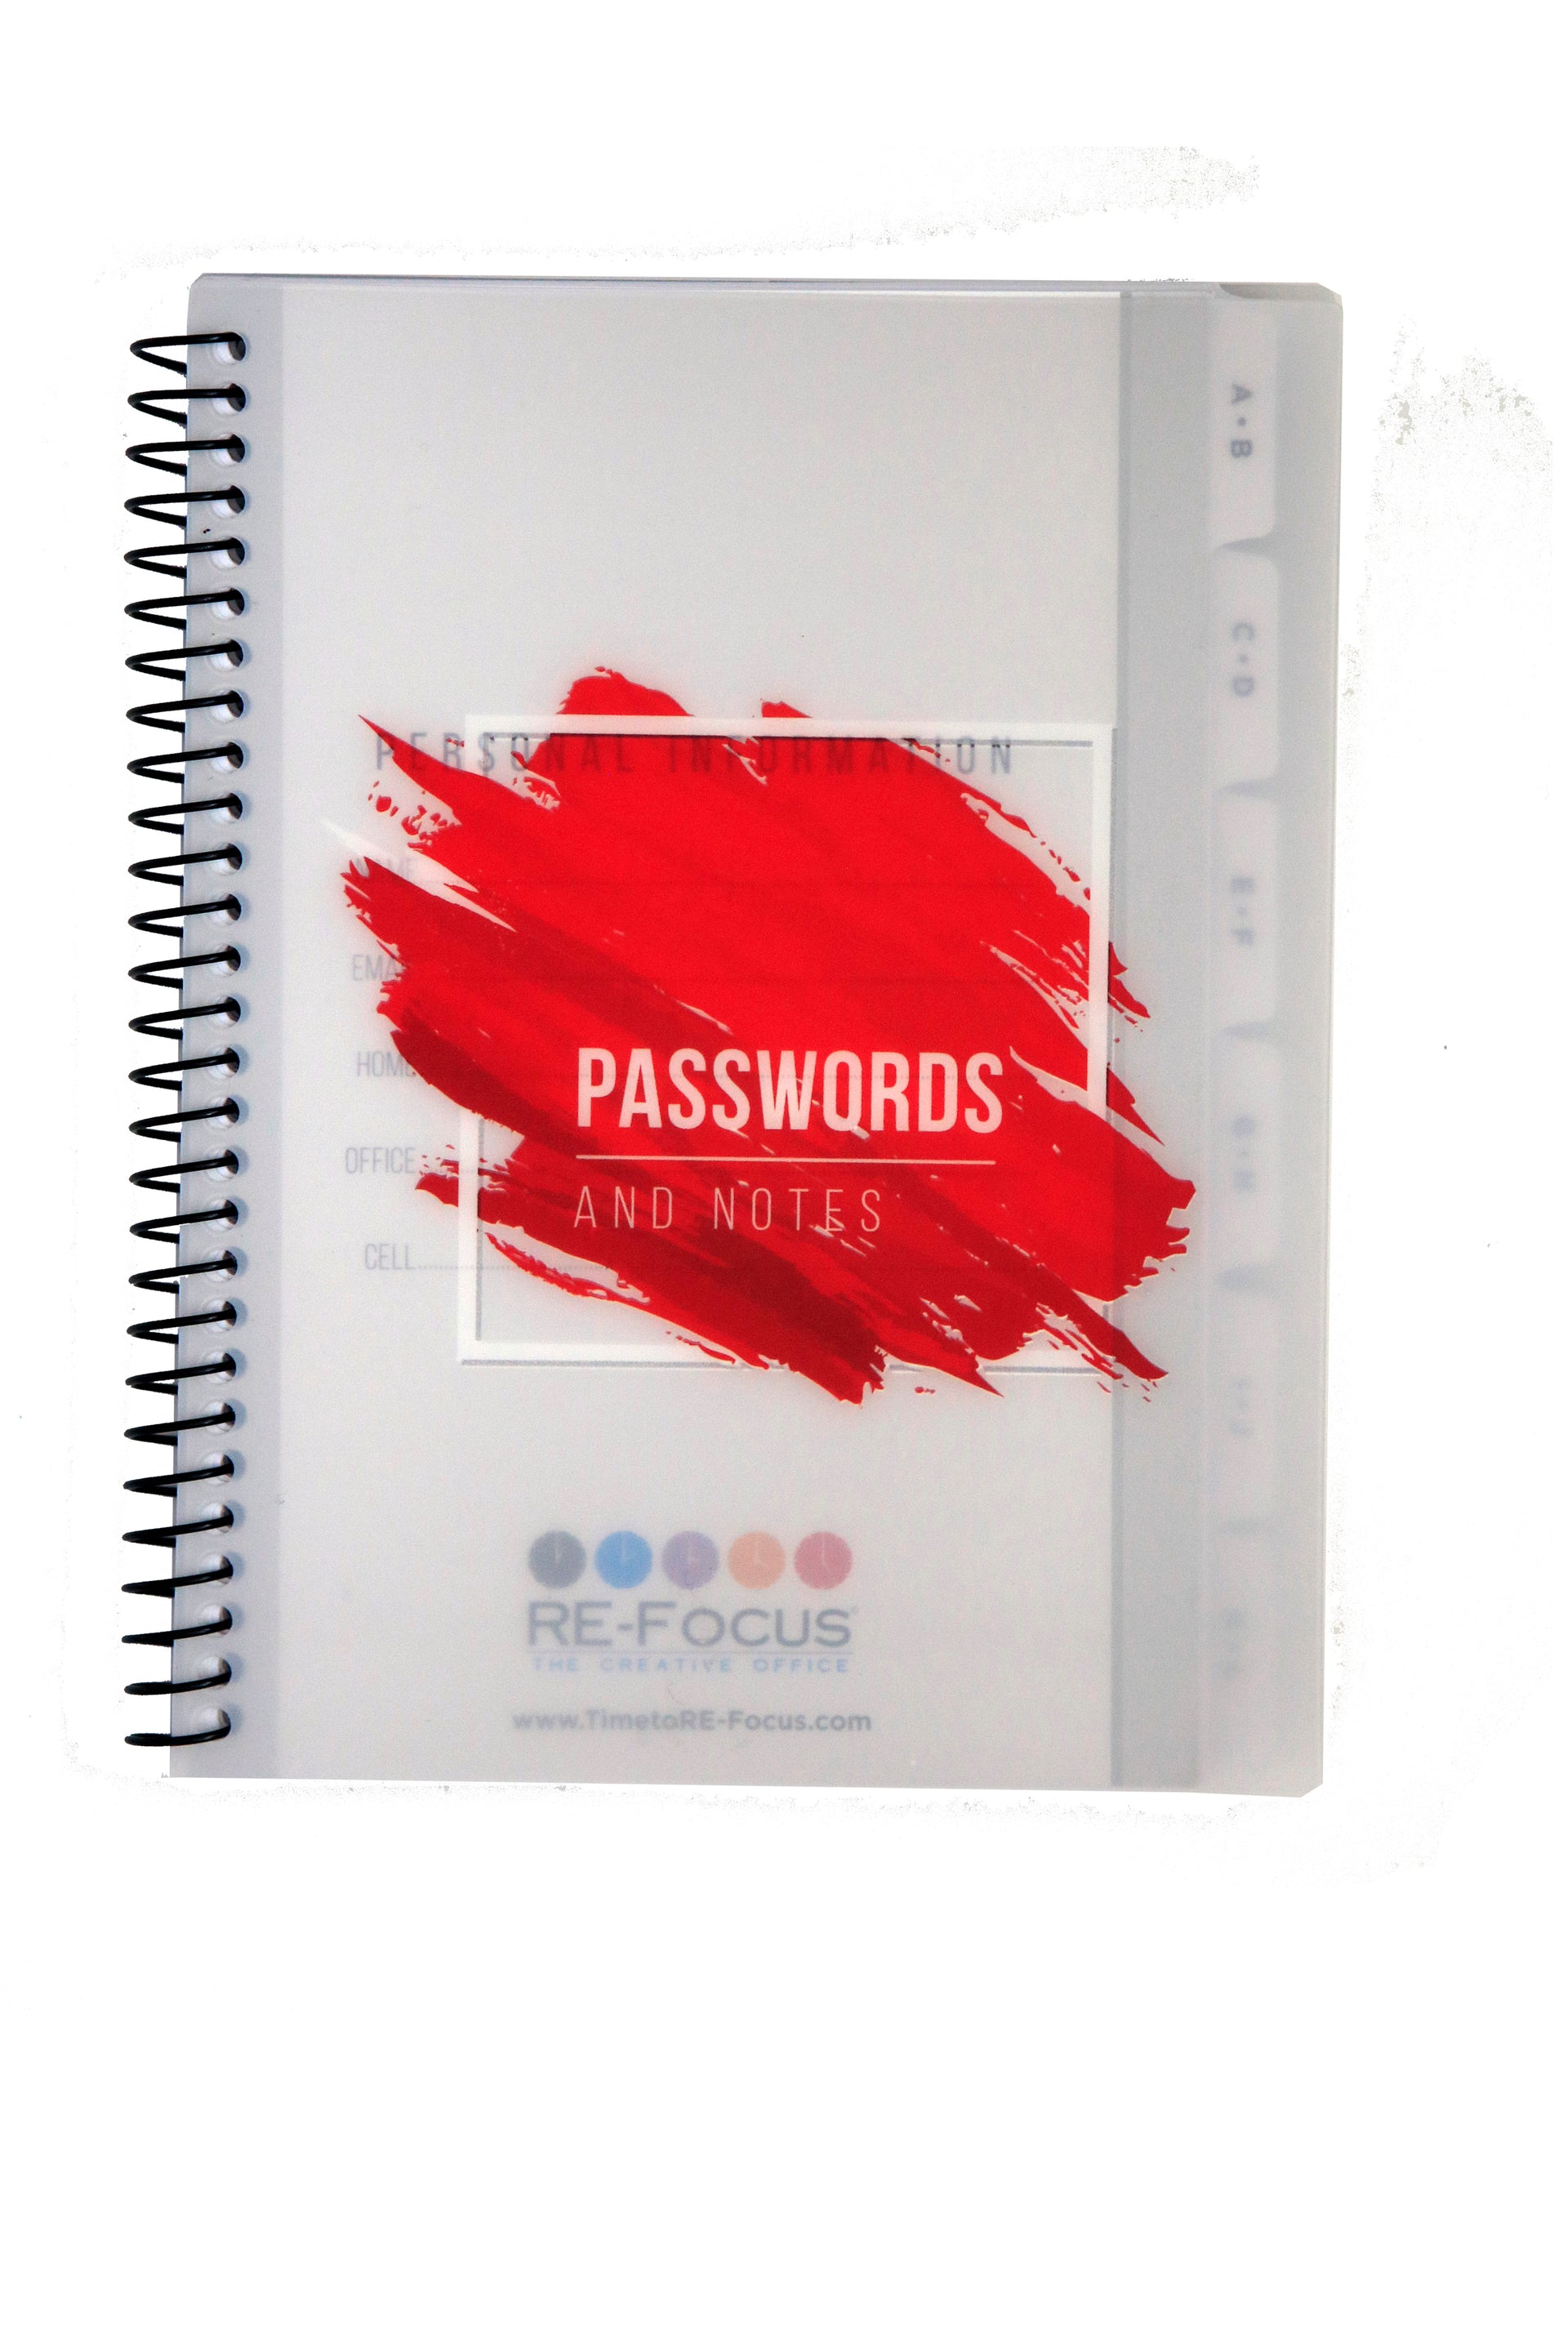 RE-FOCUS THE CREATIVE OFFICE, Small/Mini Password Book